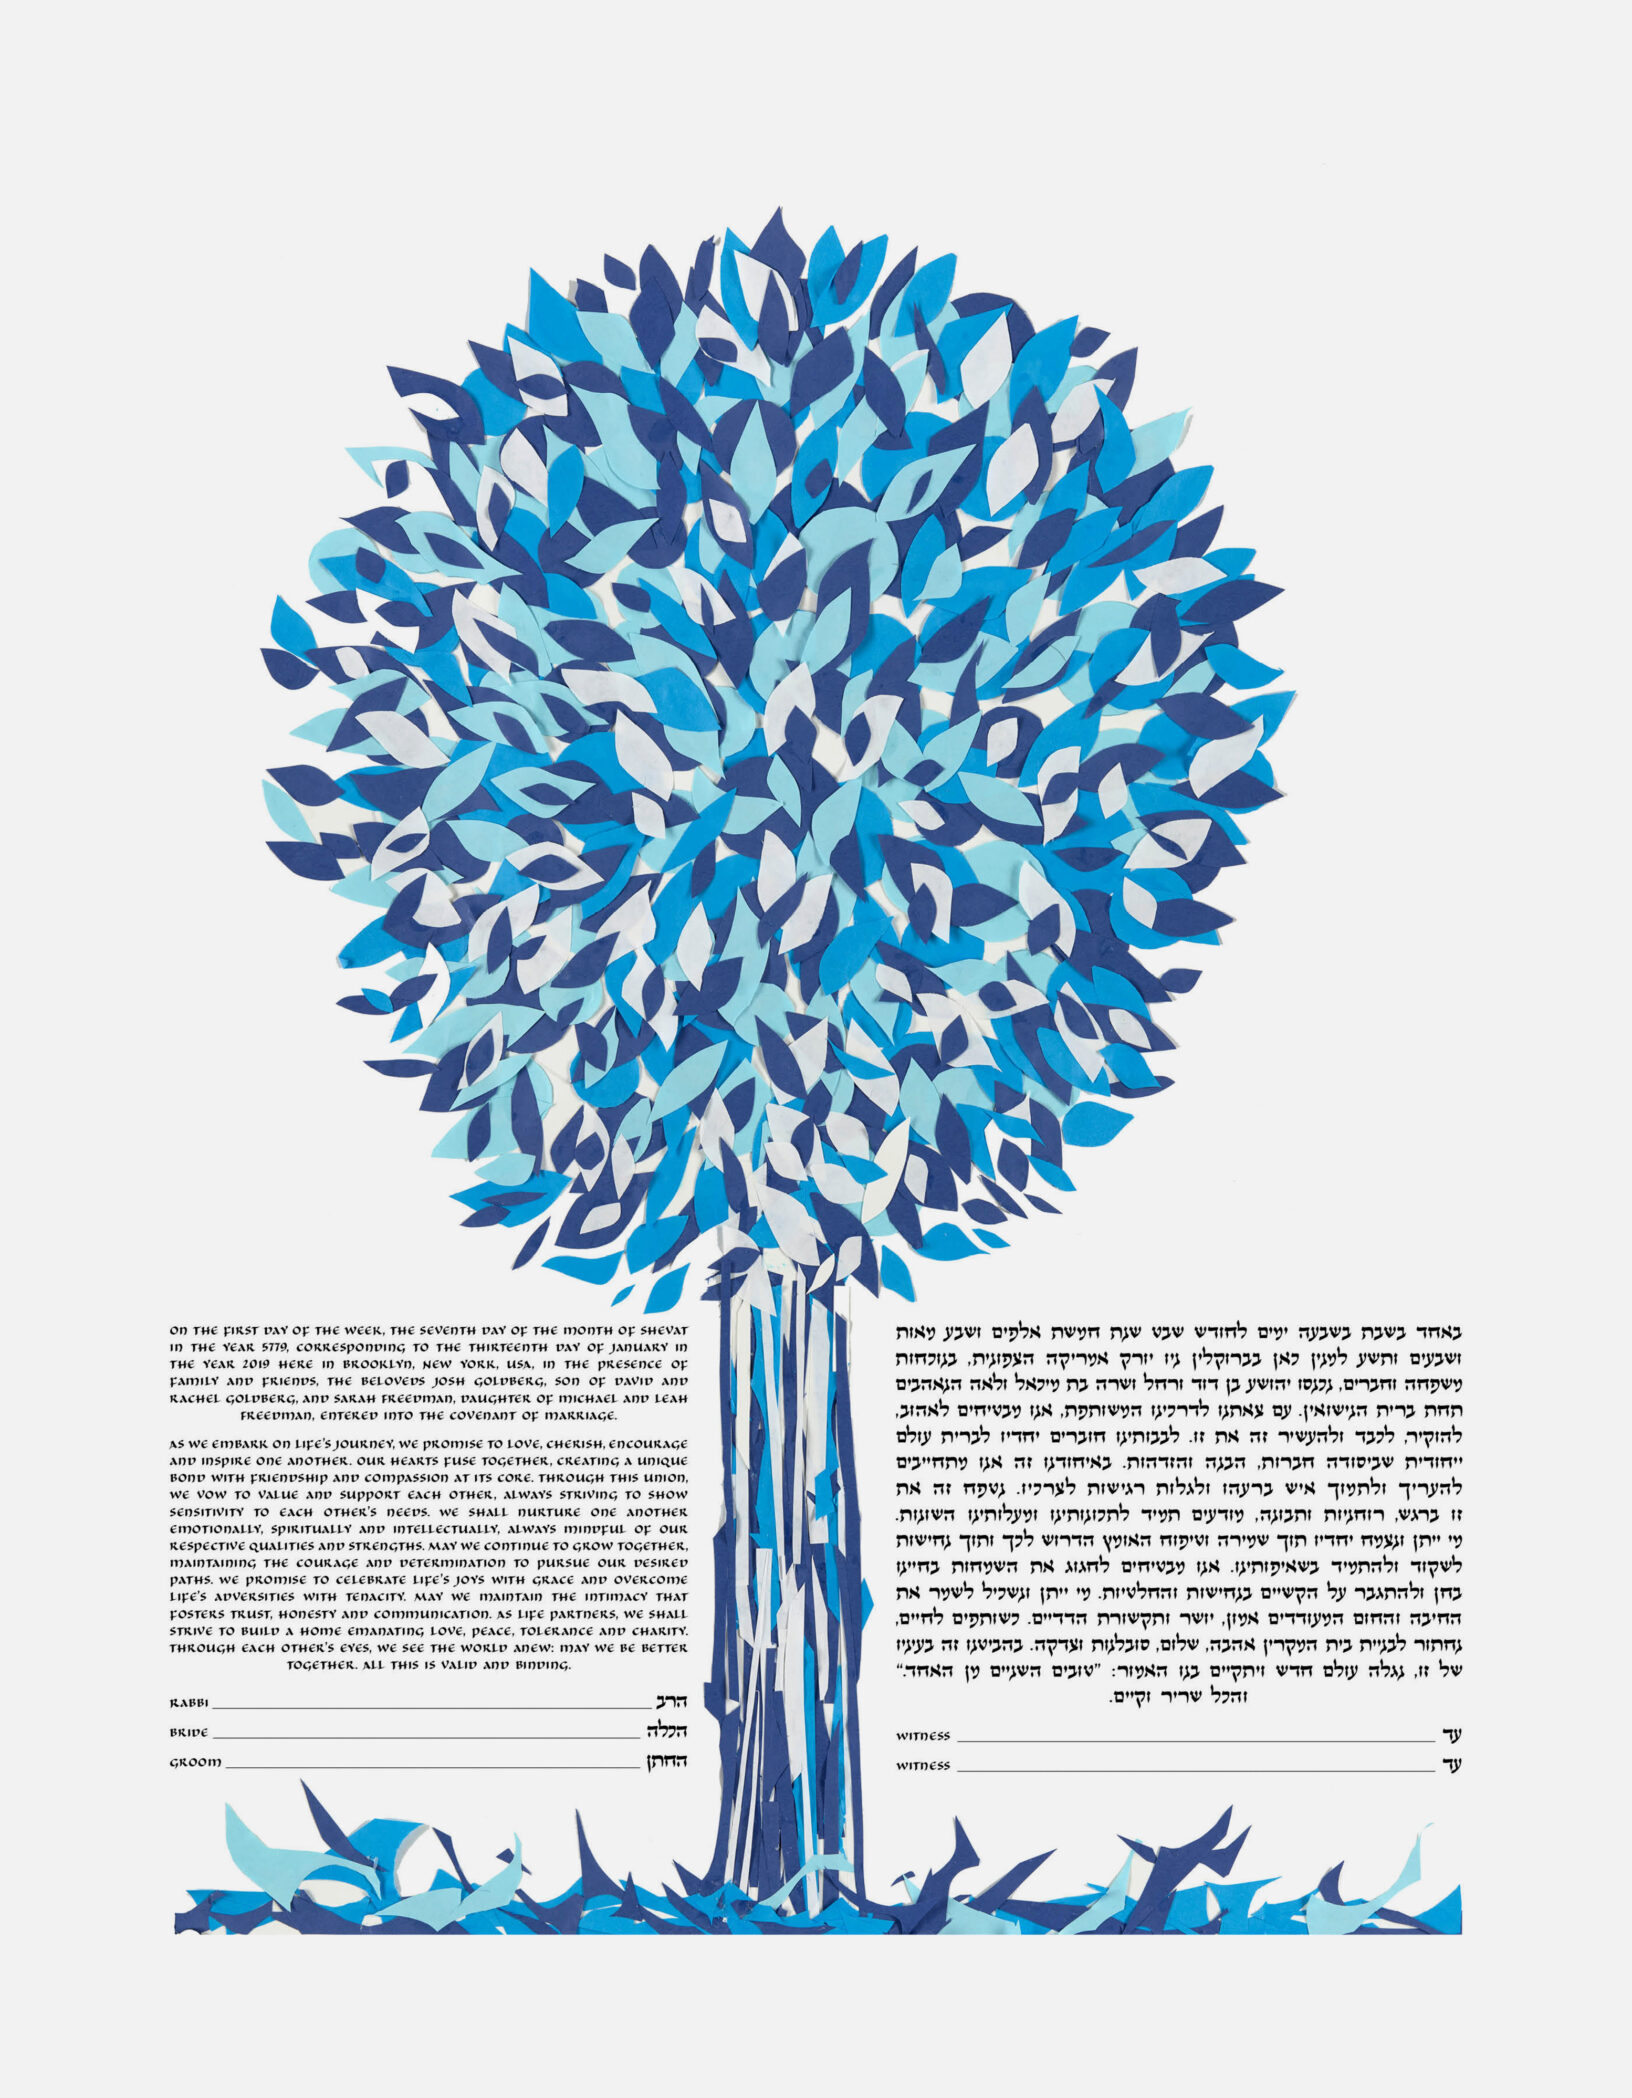 Angela Munitz Giclee Tree of Life - We Plant Our Tree Blue Ketubah Jewish Wedding Contract